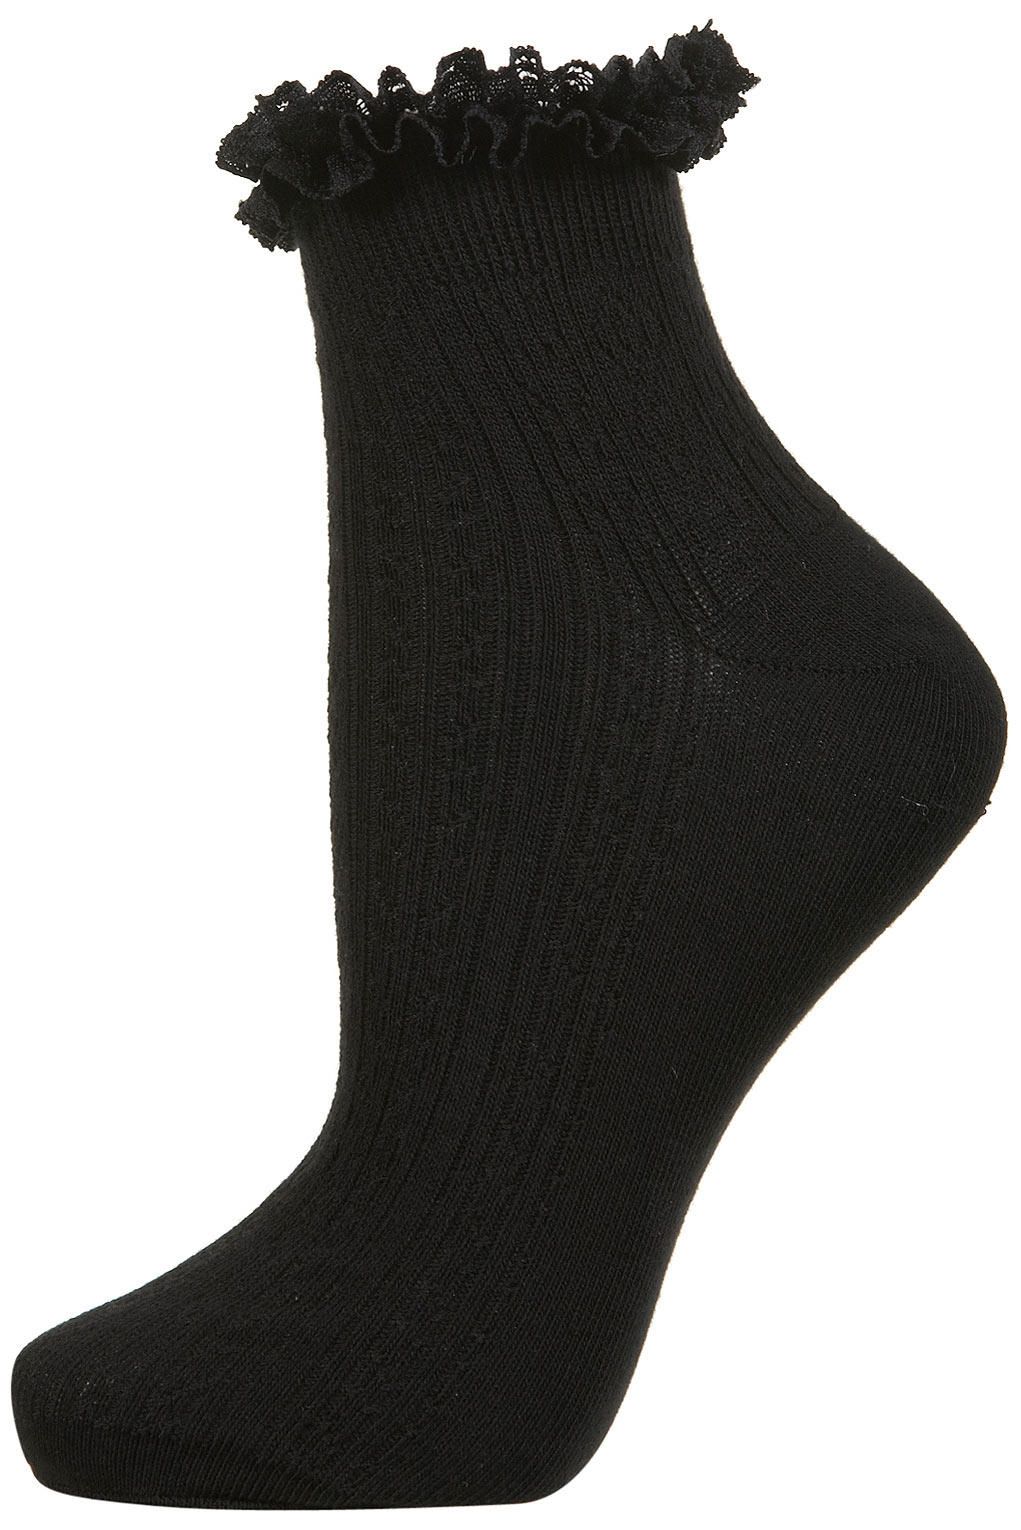 Topshop Black Lace Trim Ankle Socks in Black | Lyst